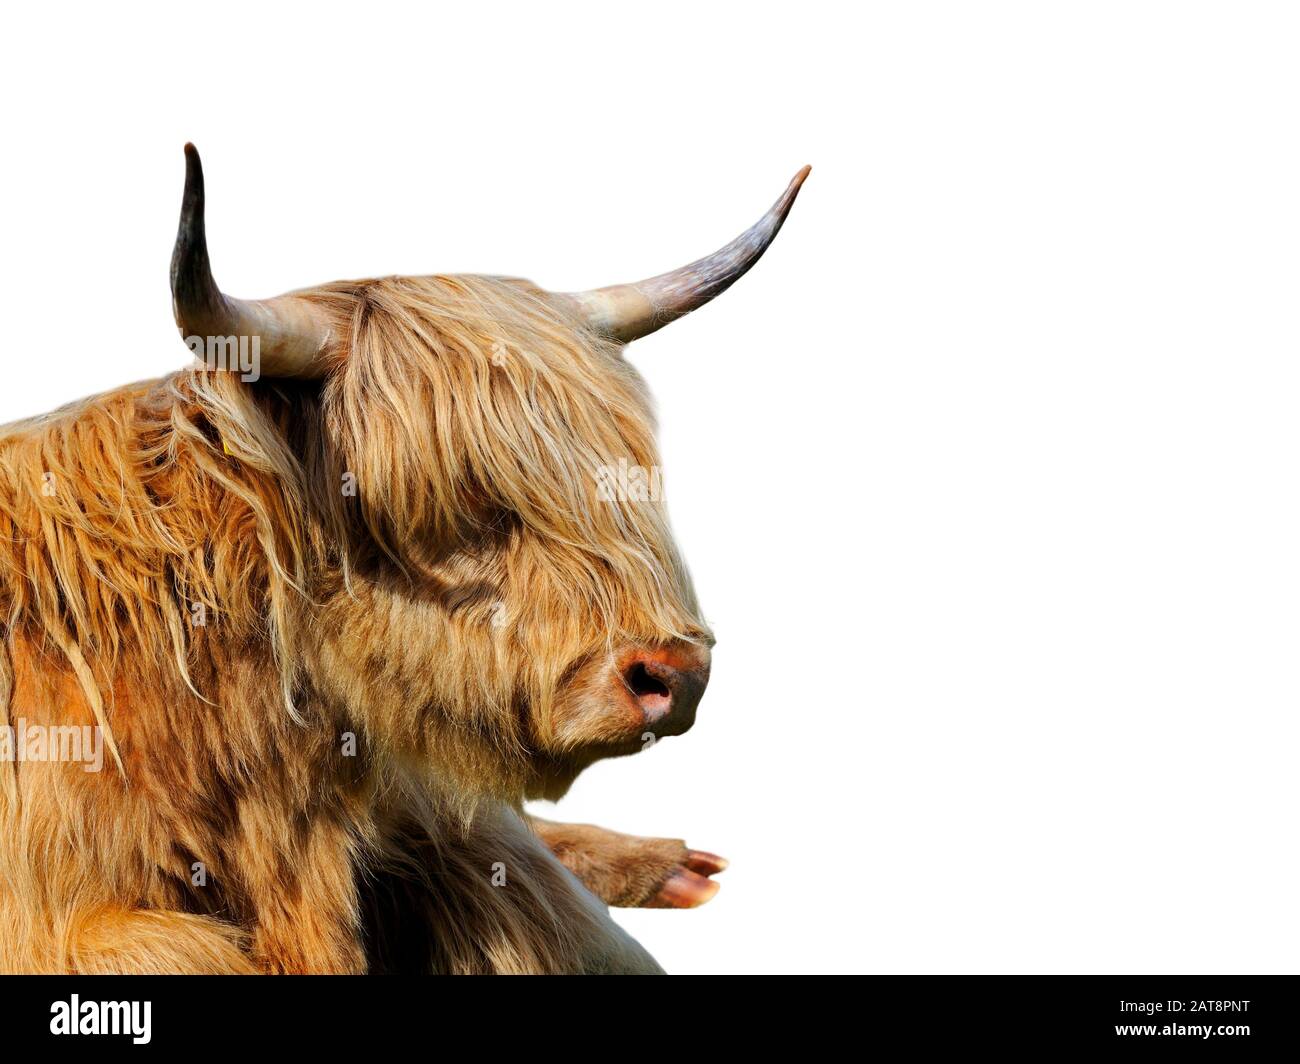 Highland cow (Bos taurus) close up portrait against white background Stock Photo